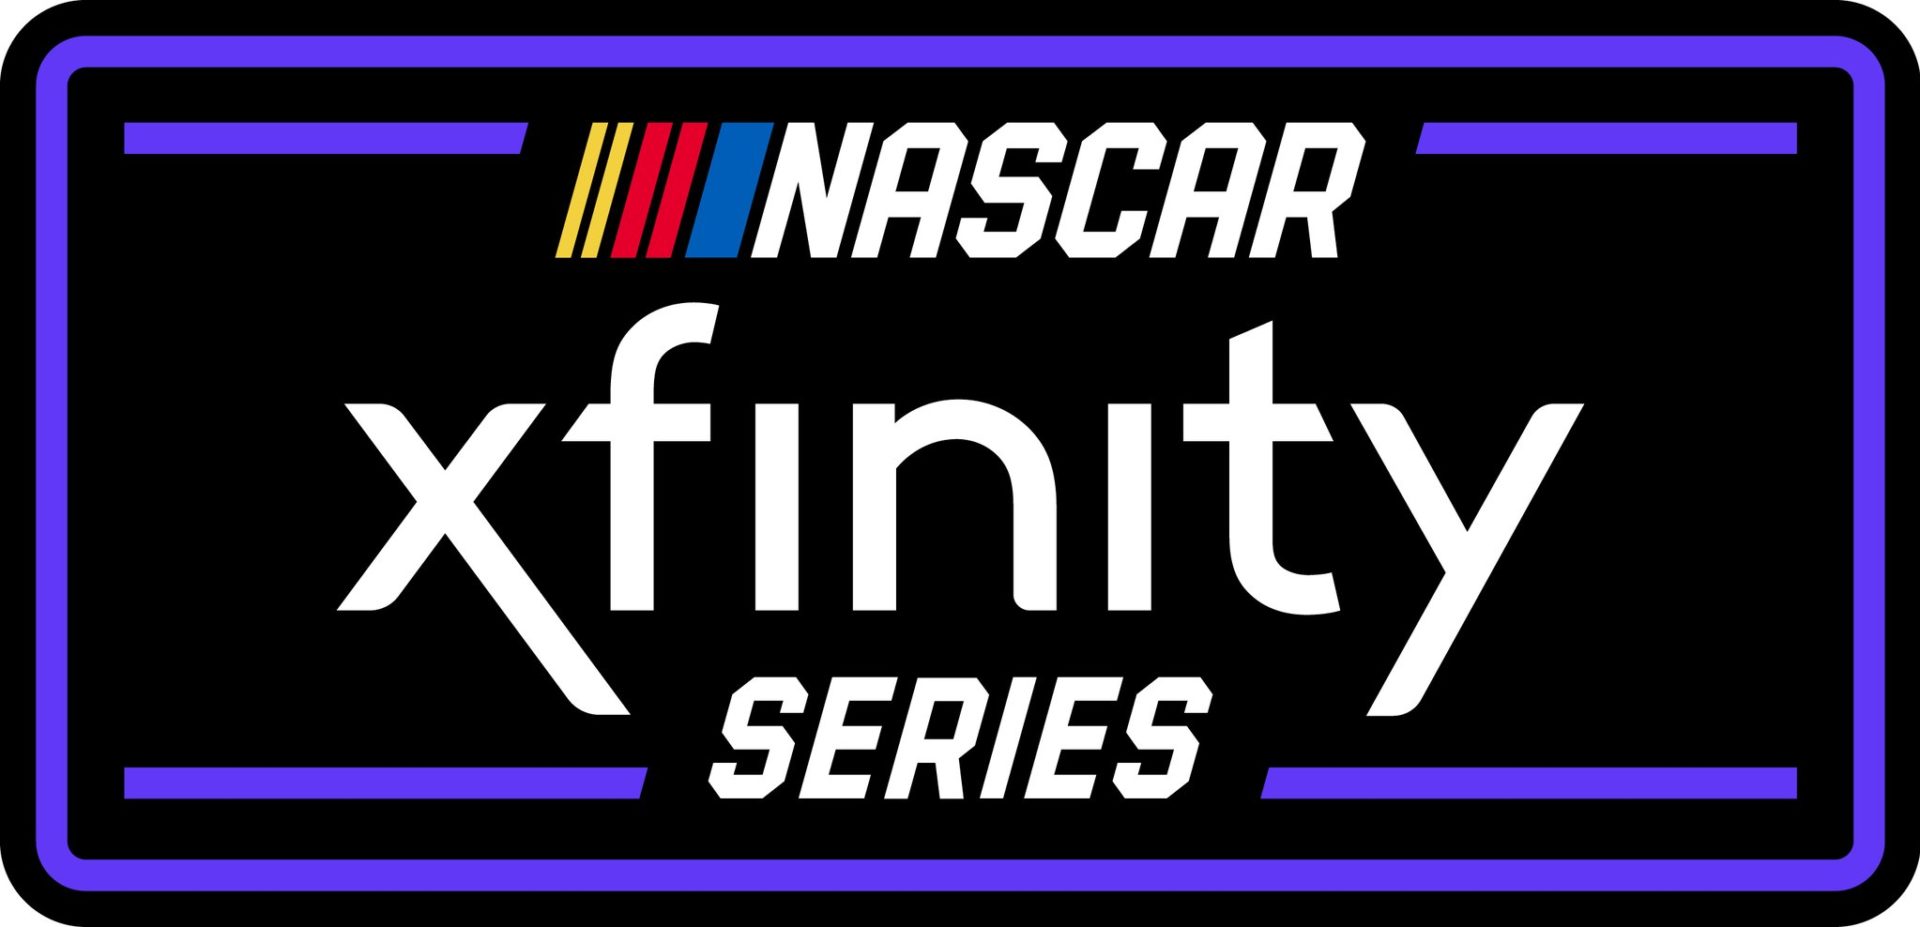 2023 NASCAR Xfinity Series Schedule - The Racing Insiders